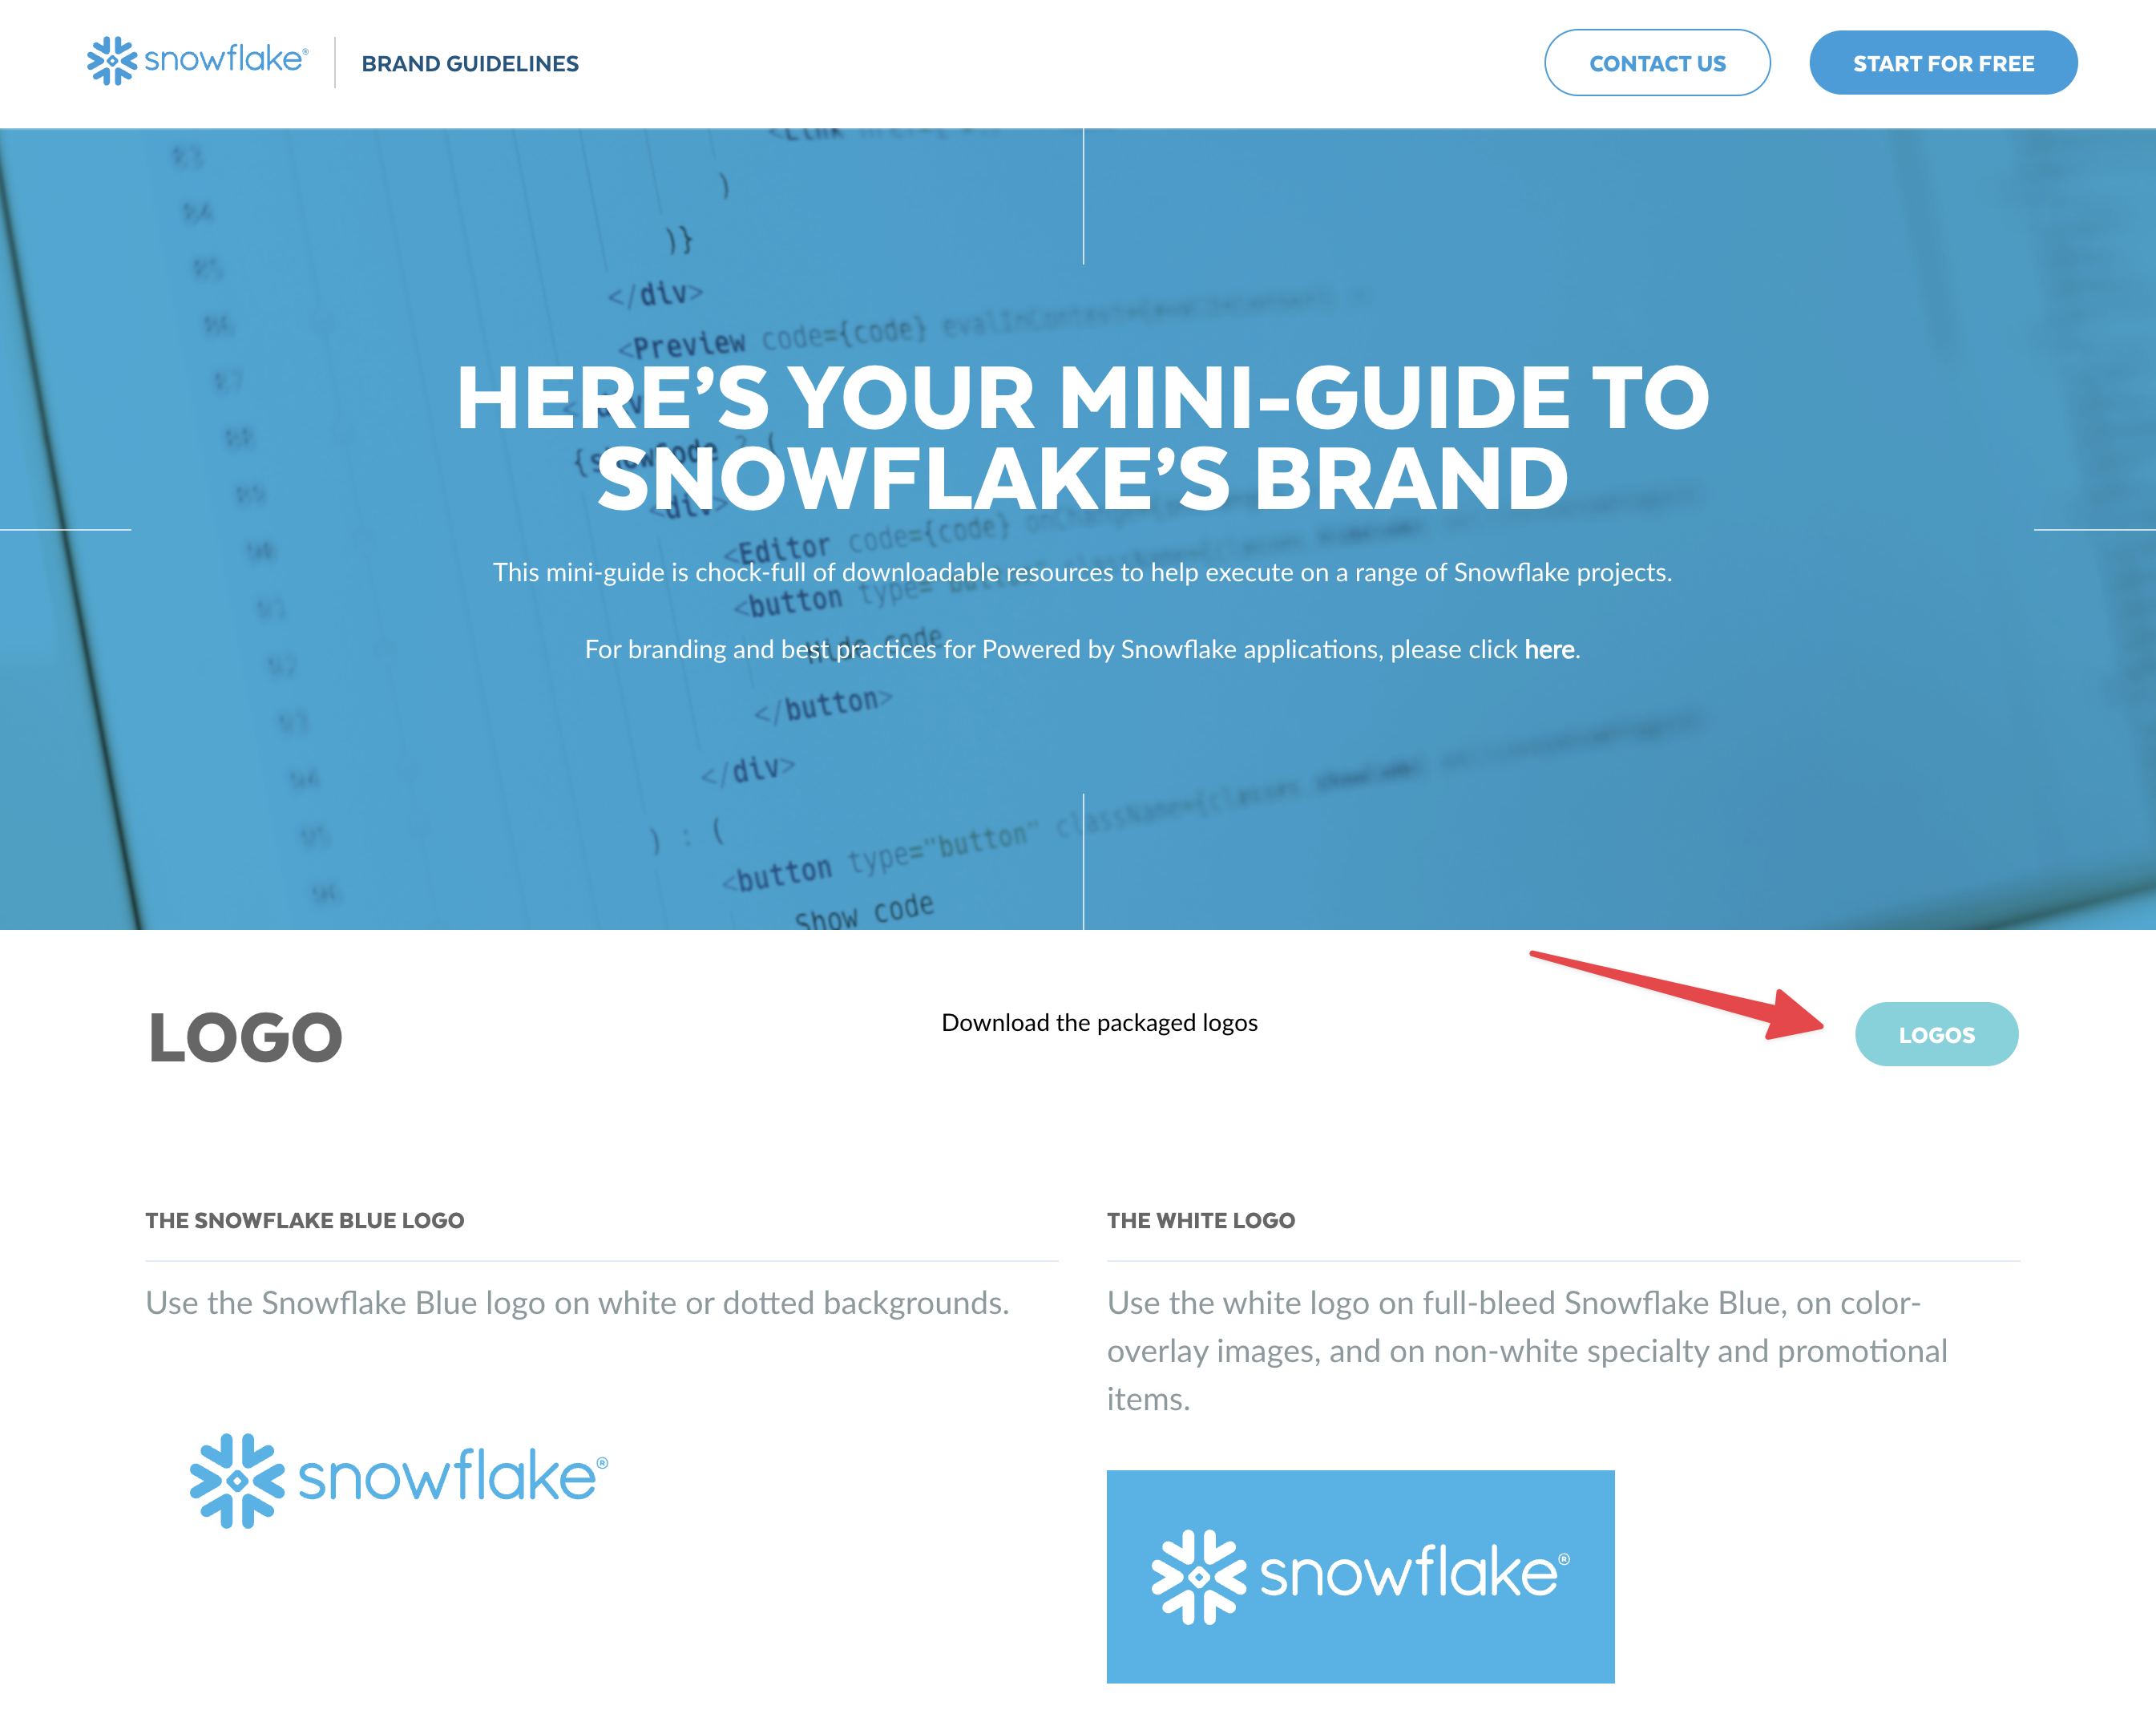 Snowflake logo download location